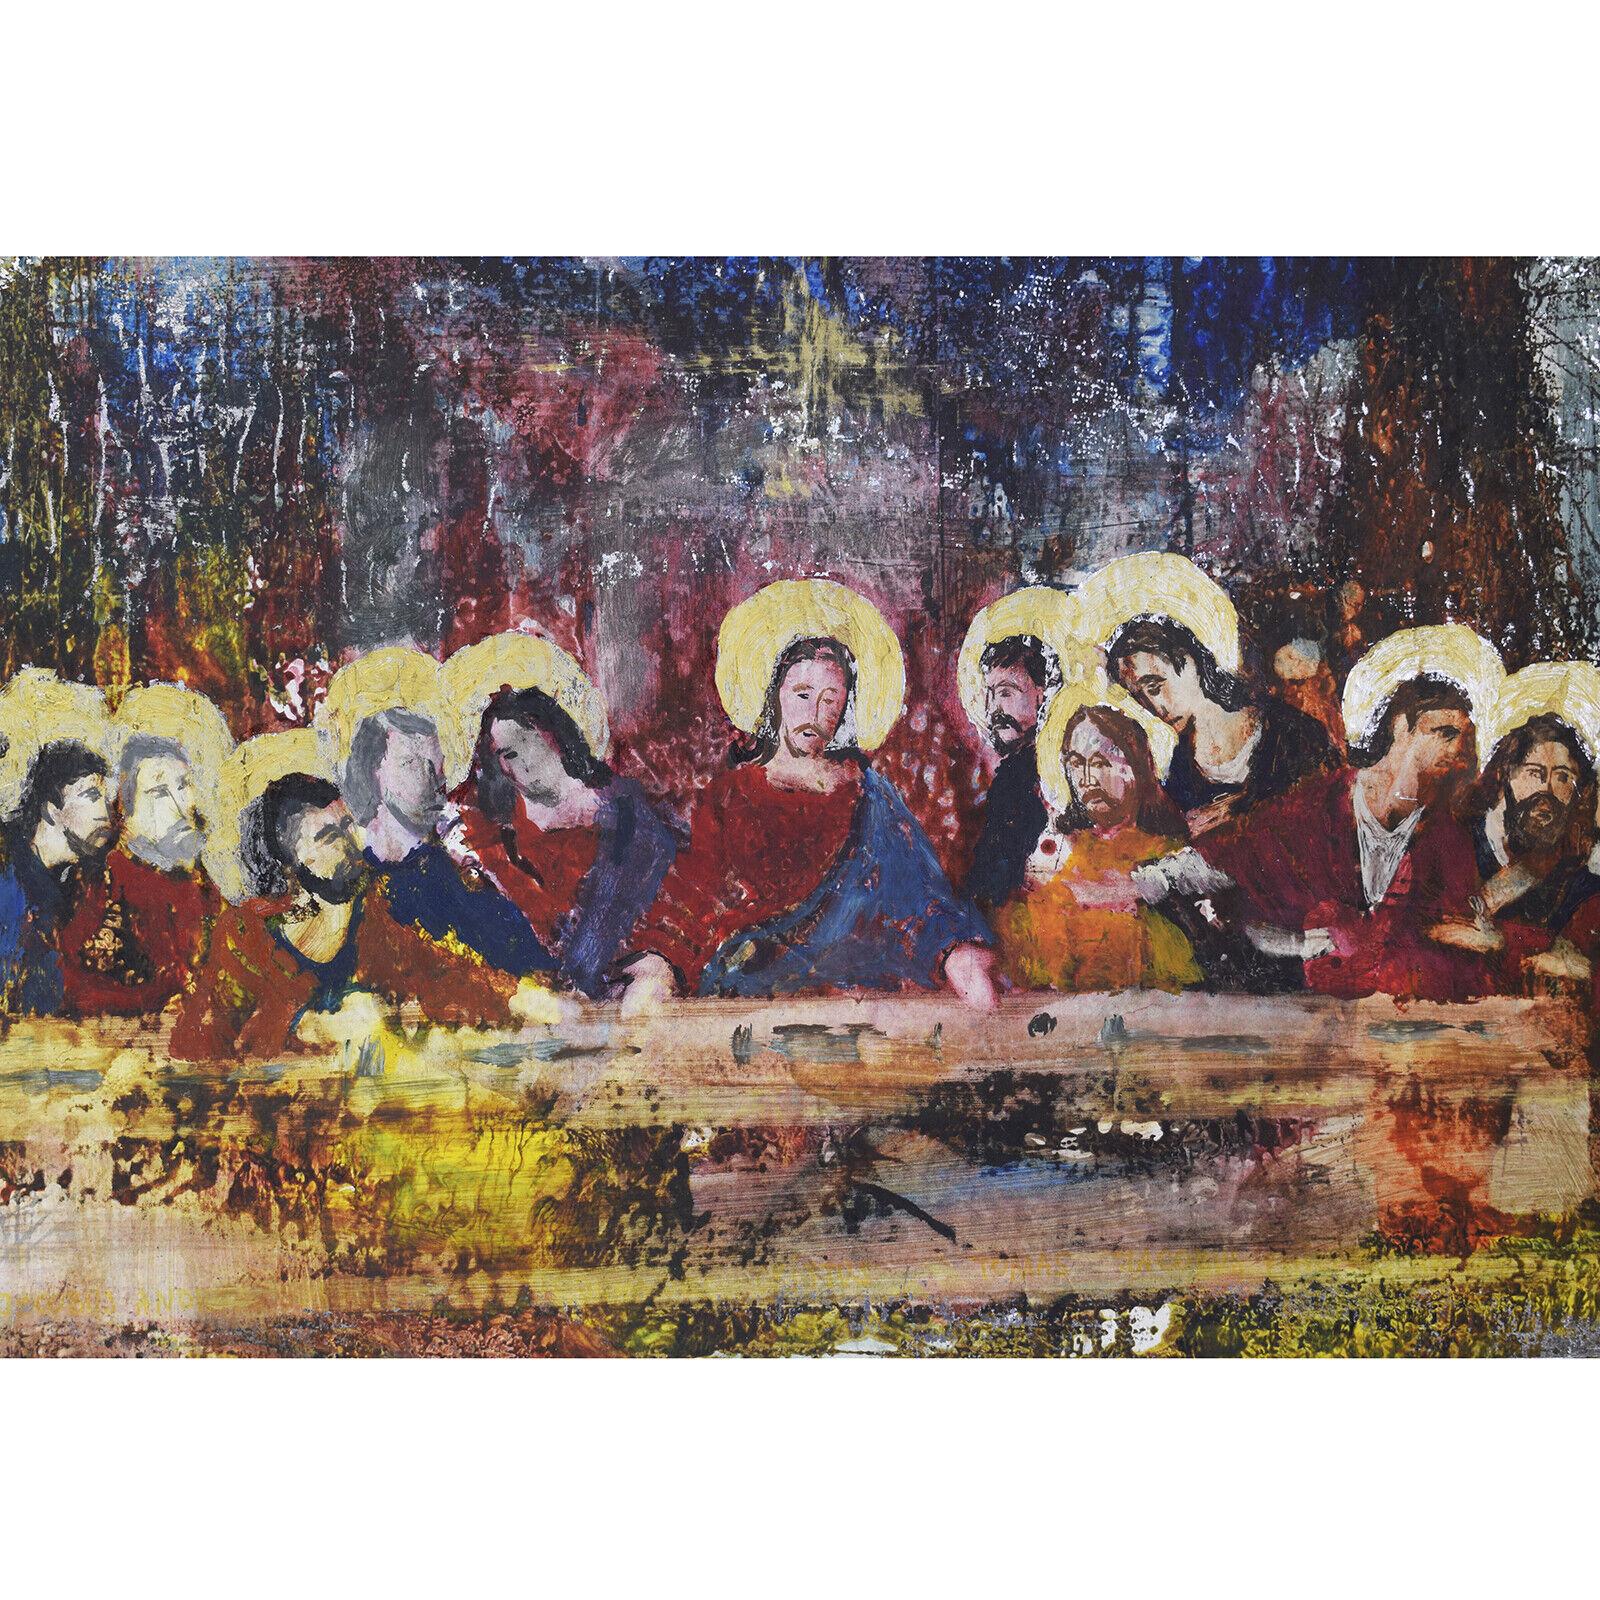 Oiled Inspired by Leonardo Da Vinci: the Last Supper Painting 1g04